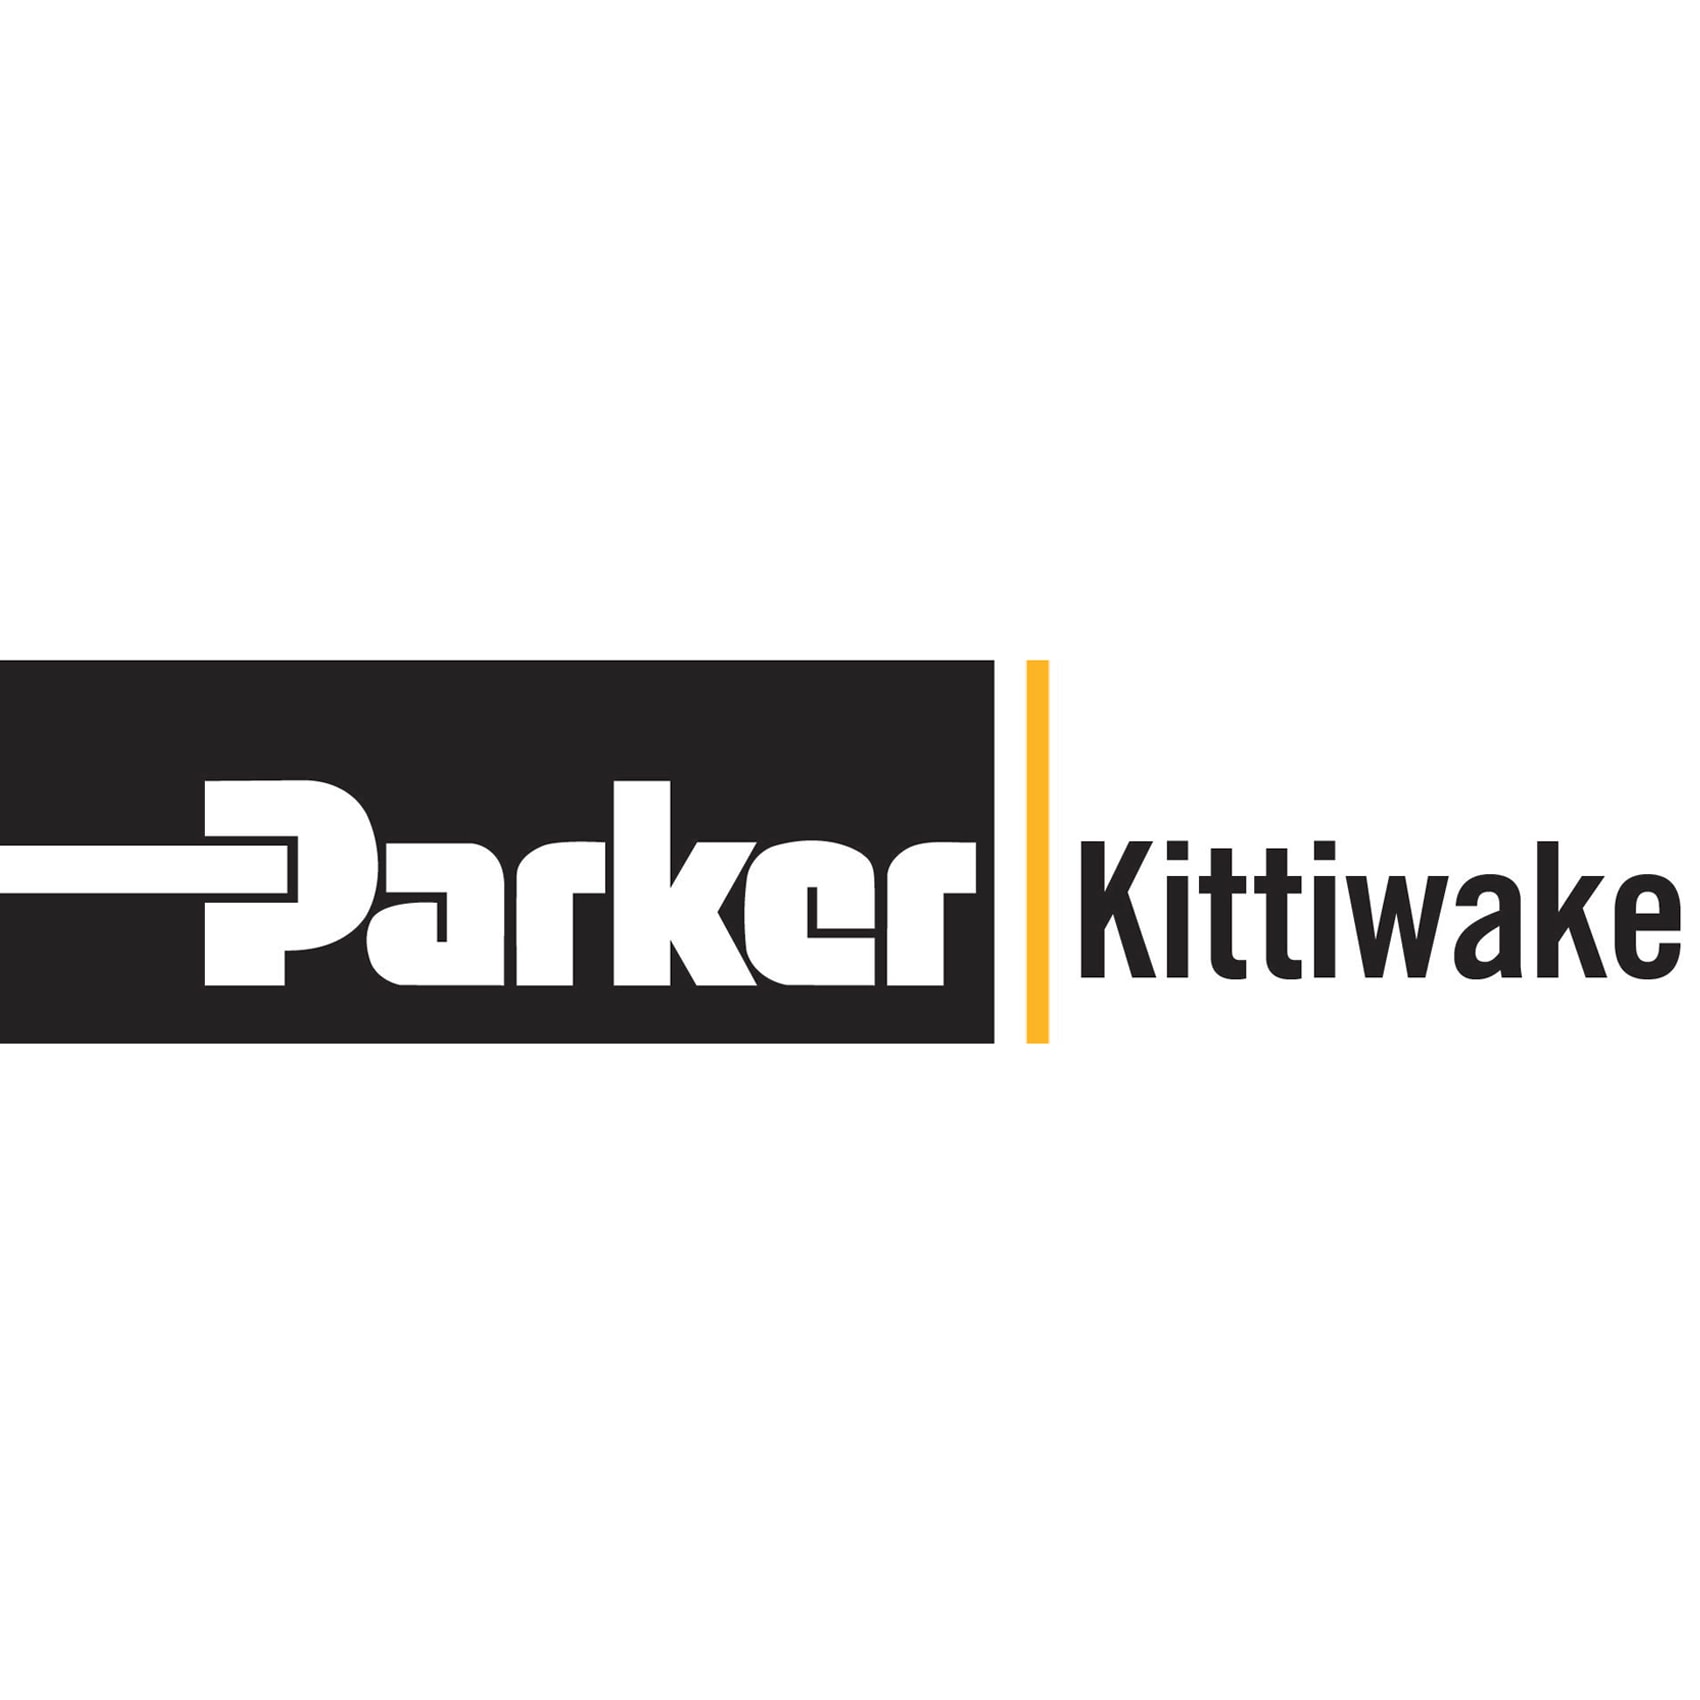 Parker Kittiwake